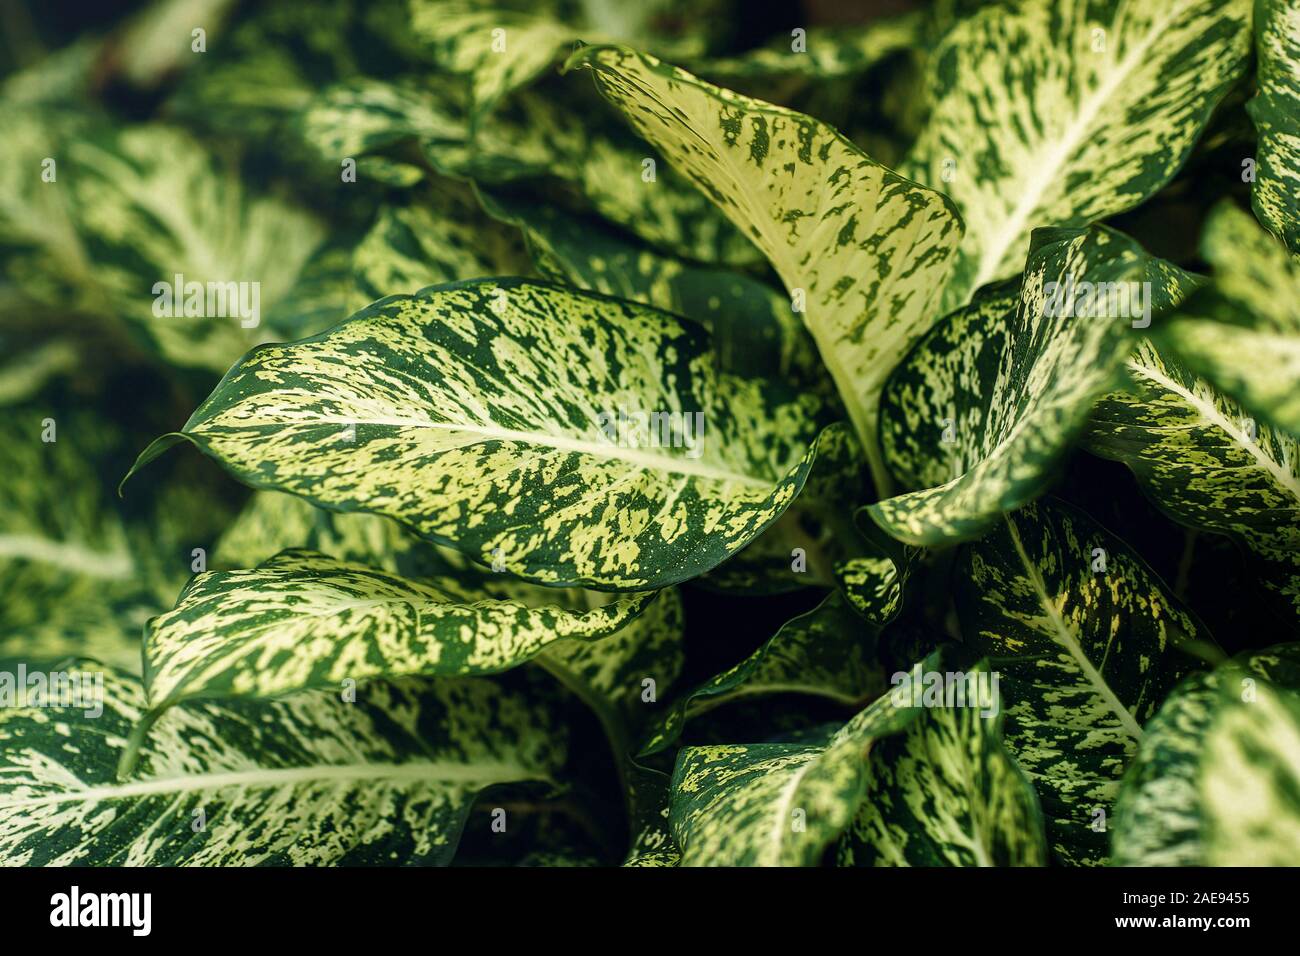 green and white leaf background, plant Dieffenbachia. Stock Photo